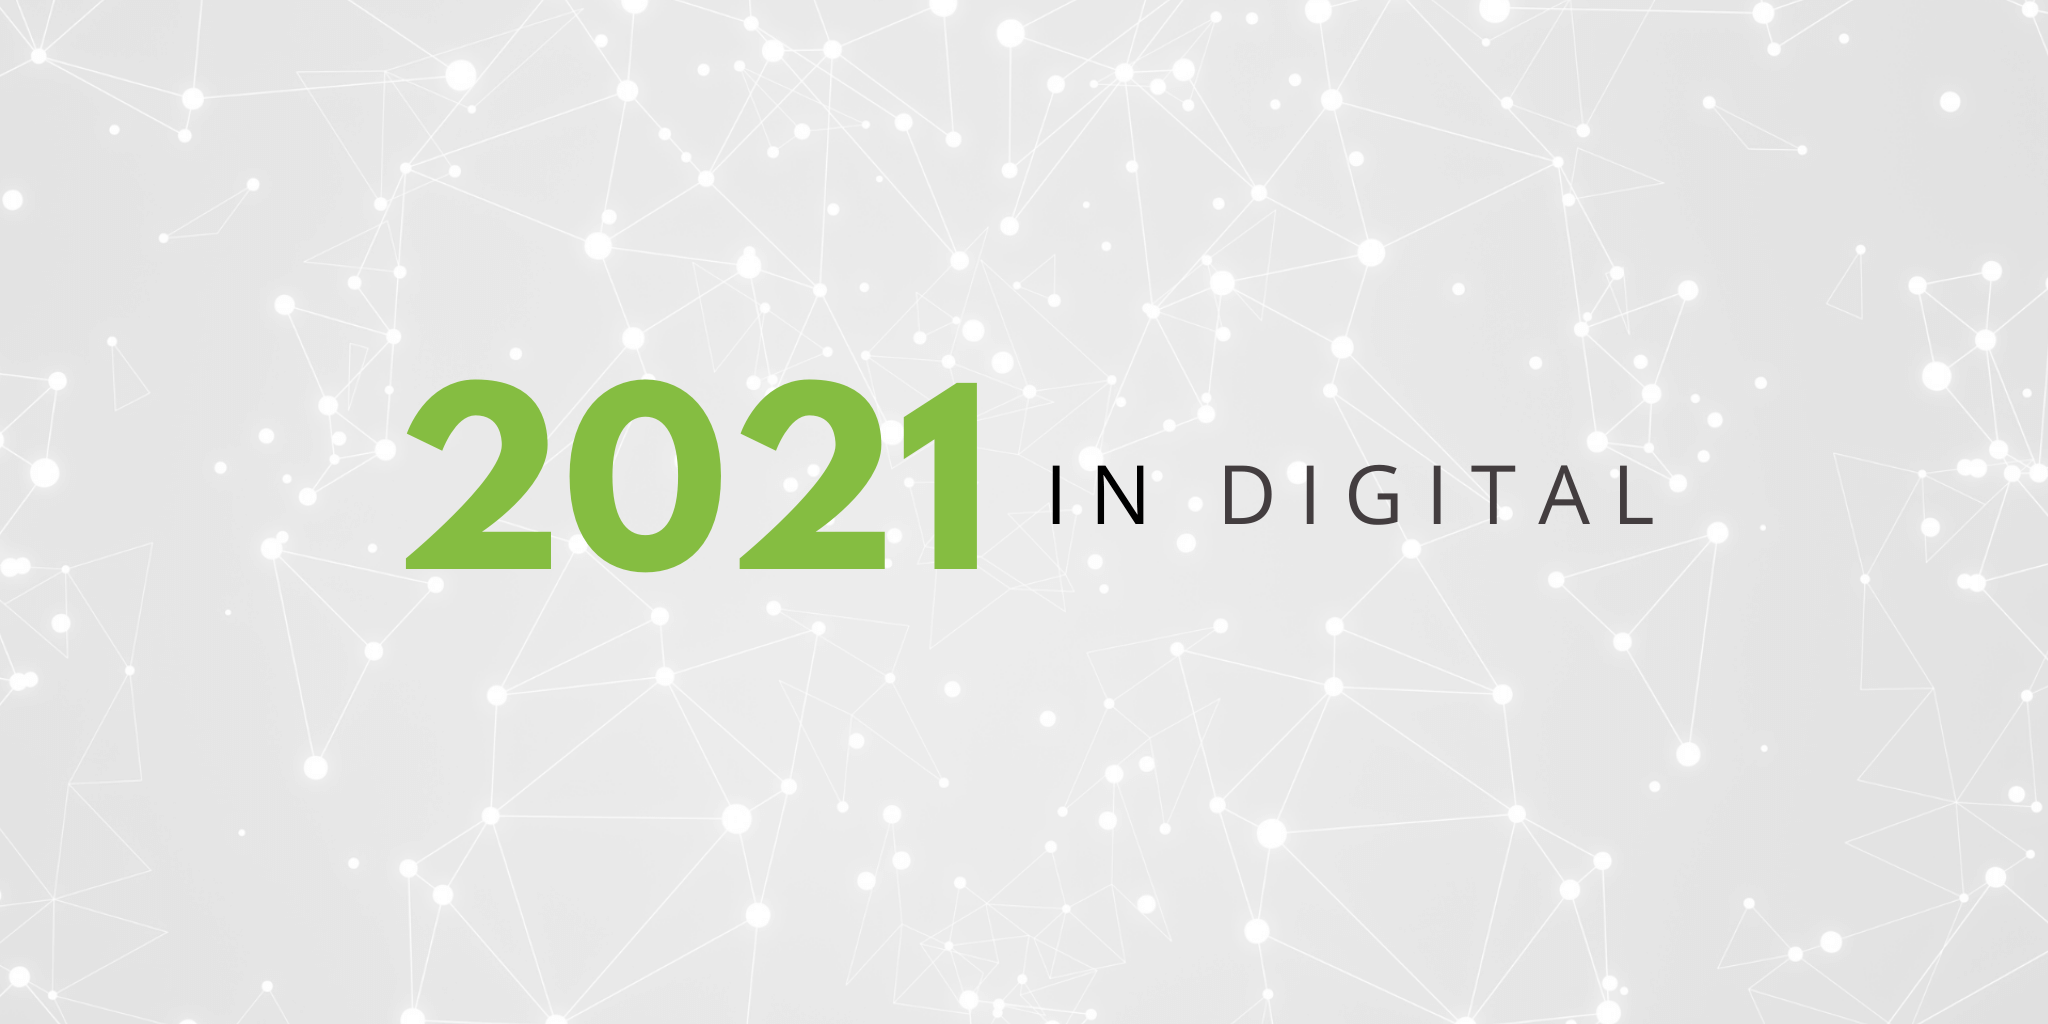 2021 In Digital